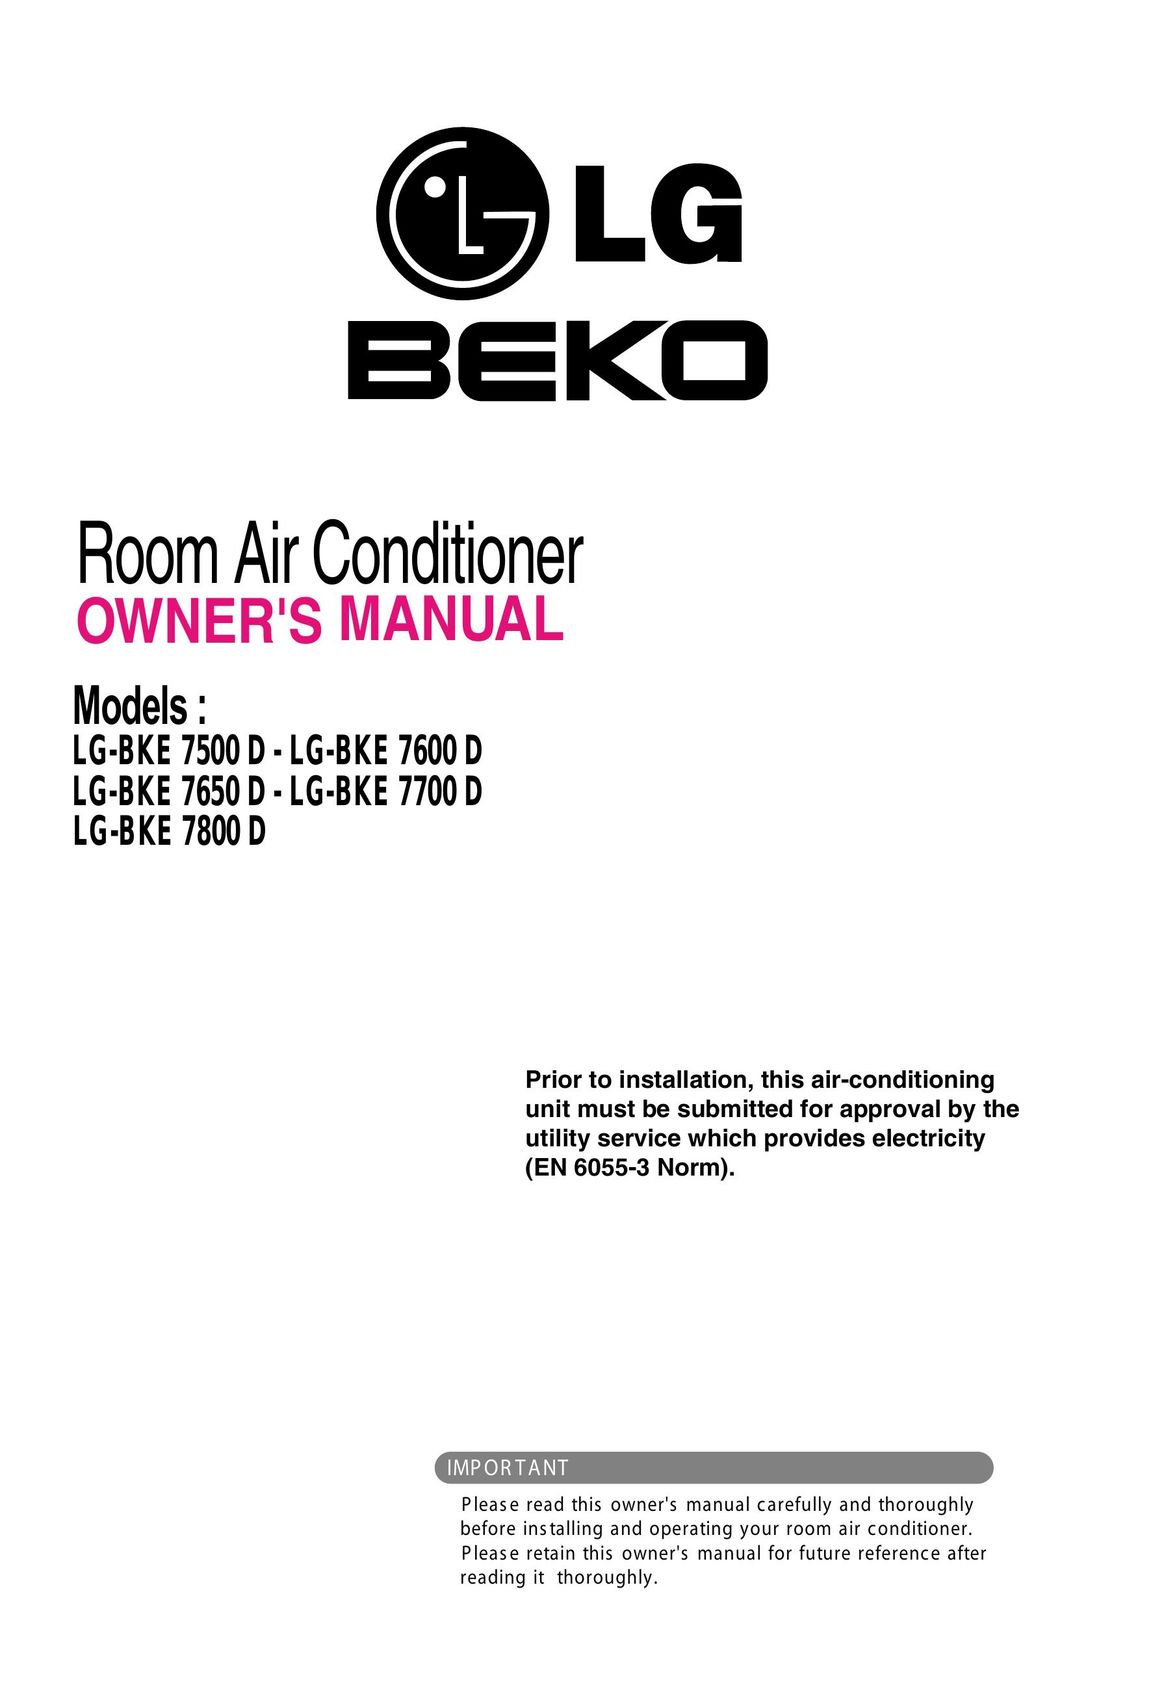 Beko LG-BKE 7500 D, LG-BKE 7600 D, LG-BKE7650 D, LG-BKE 7700 D, LG-BKE 7800 D Air Conditioner User Manual